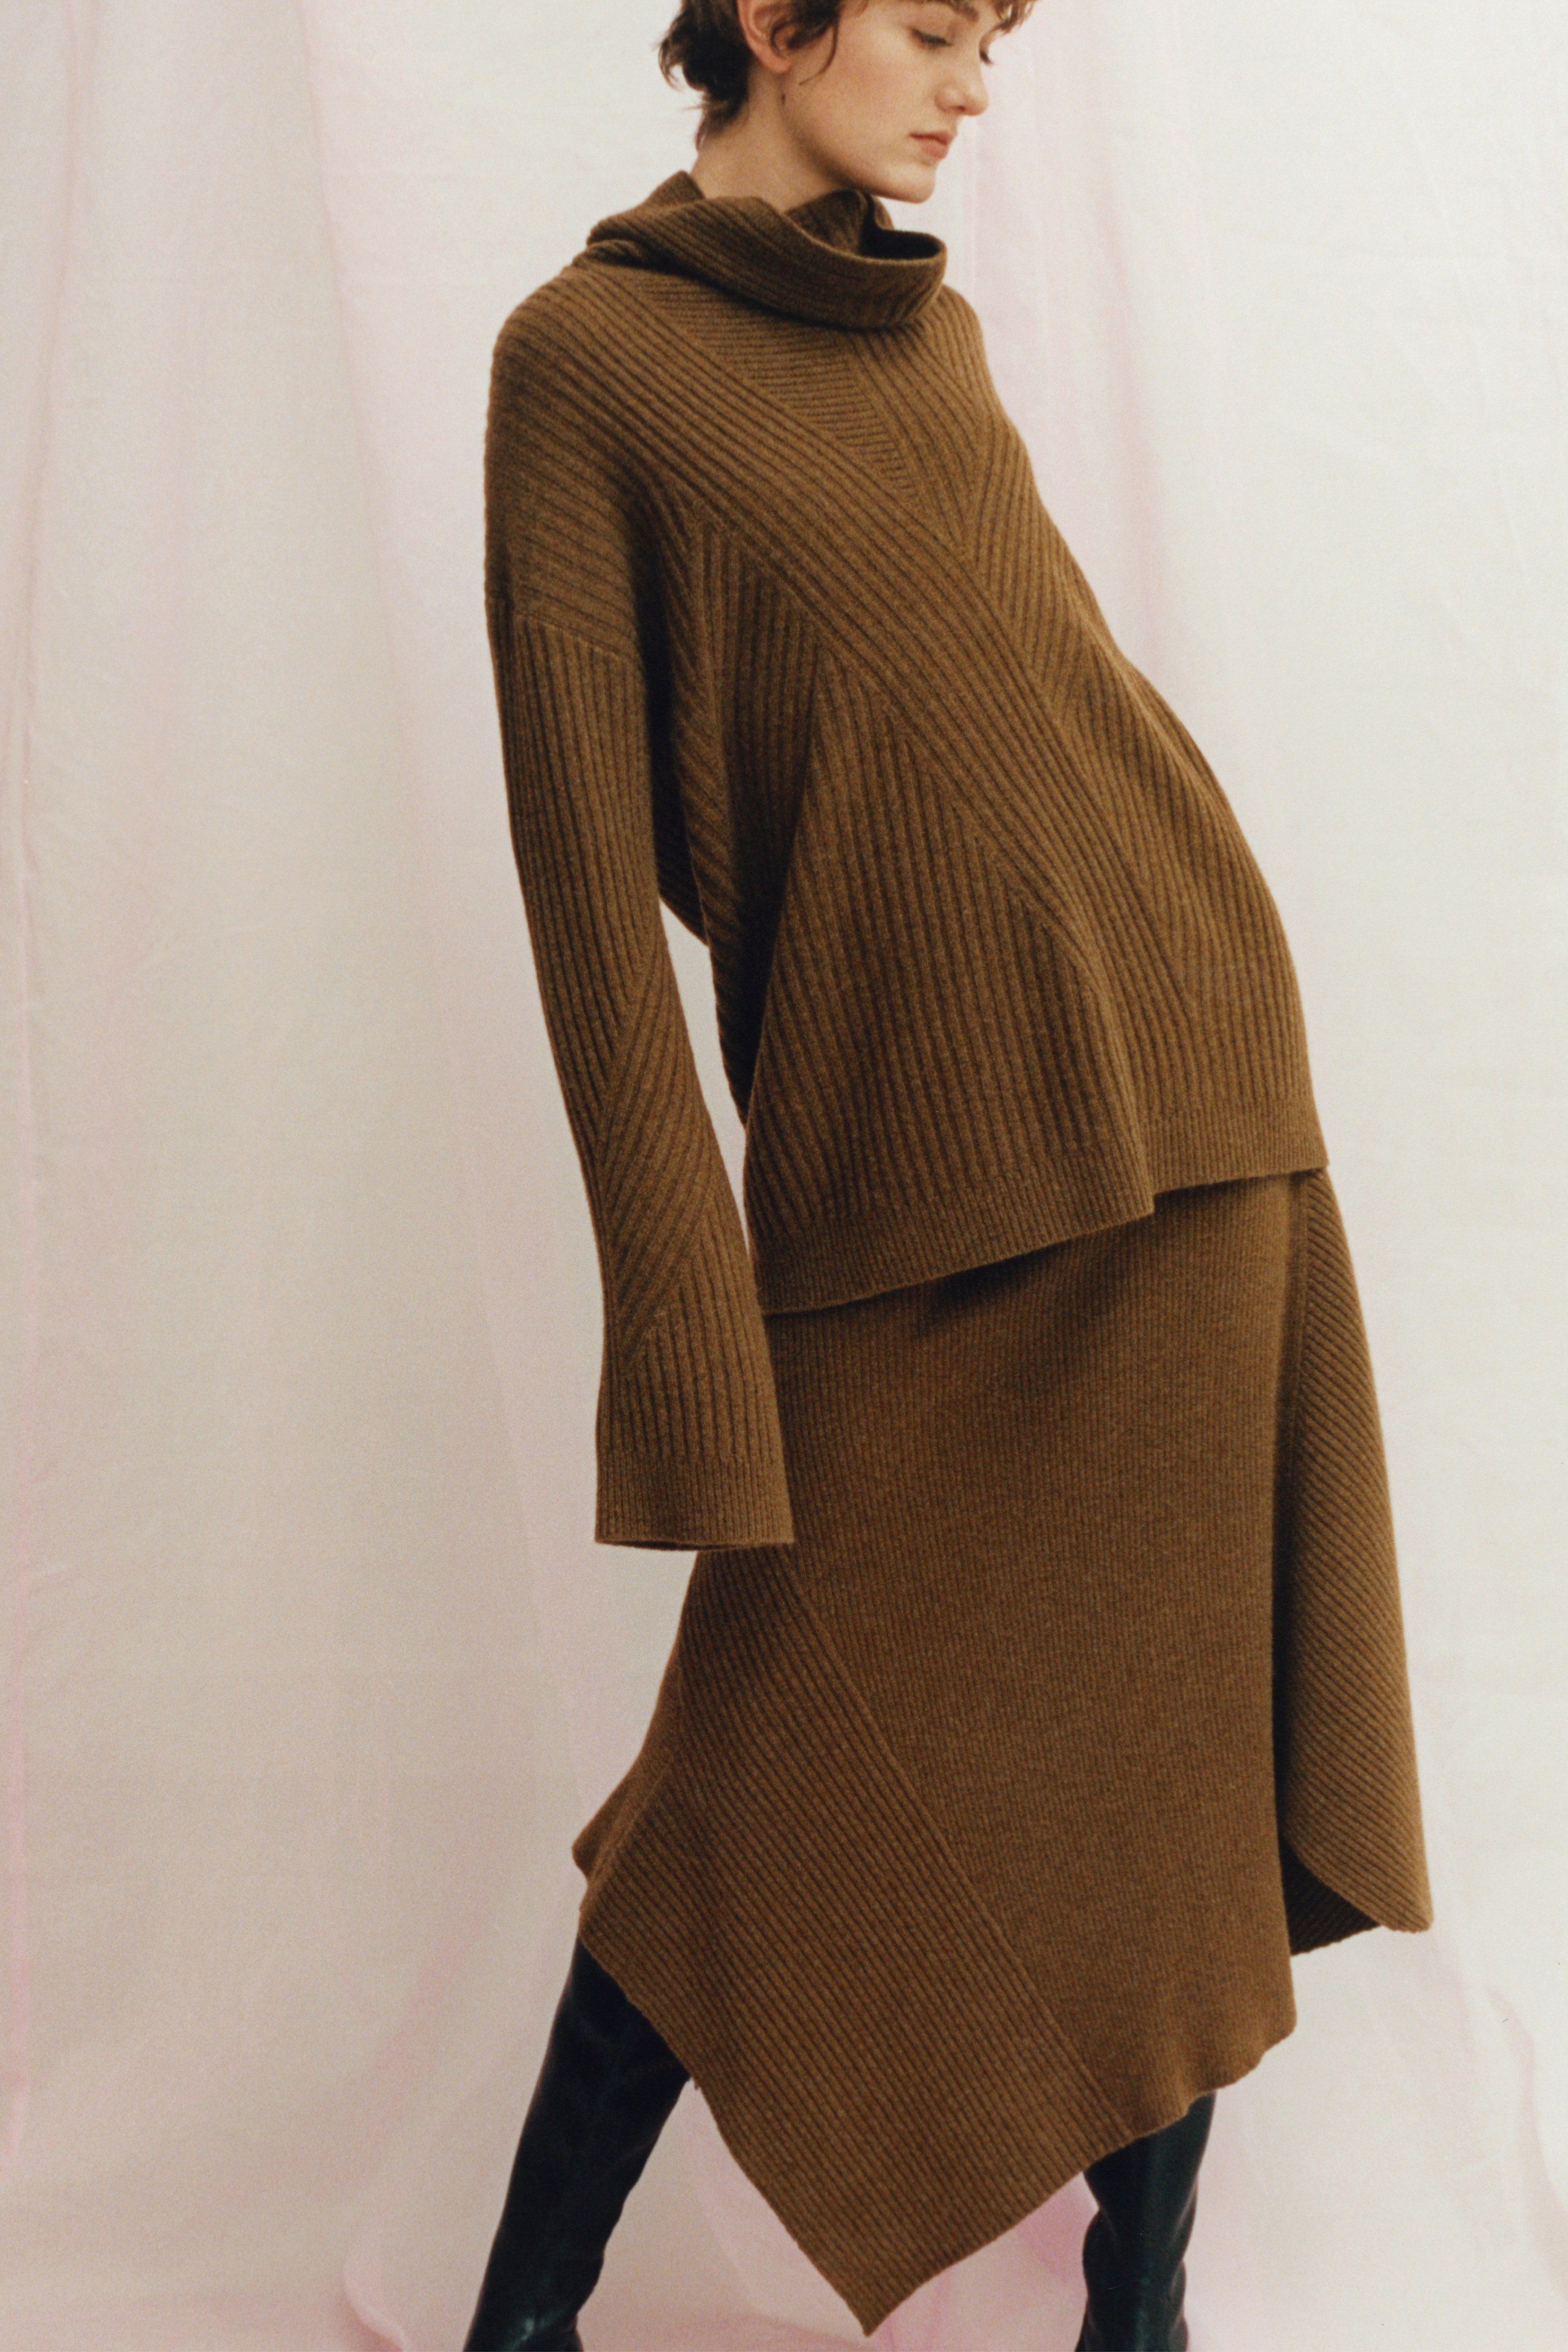 Design Model Gamis Seragam Pernikahan D0dg Pringle Of Scotland Pre Fall 2019 Collection Vogue